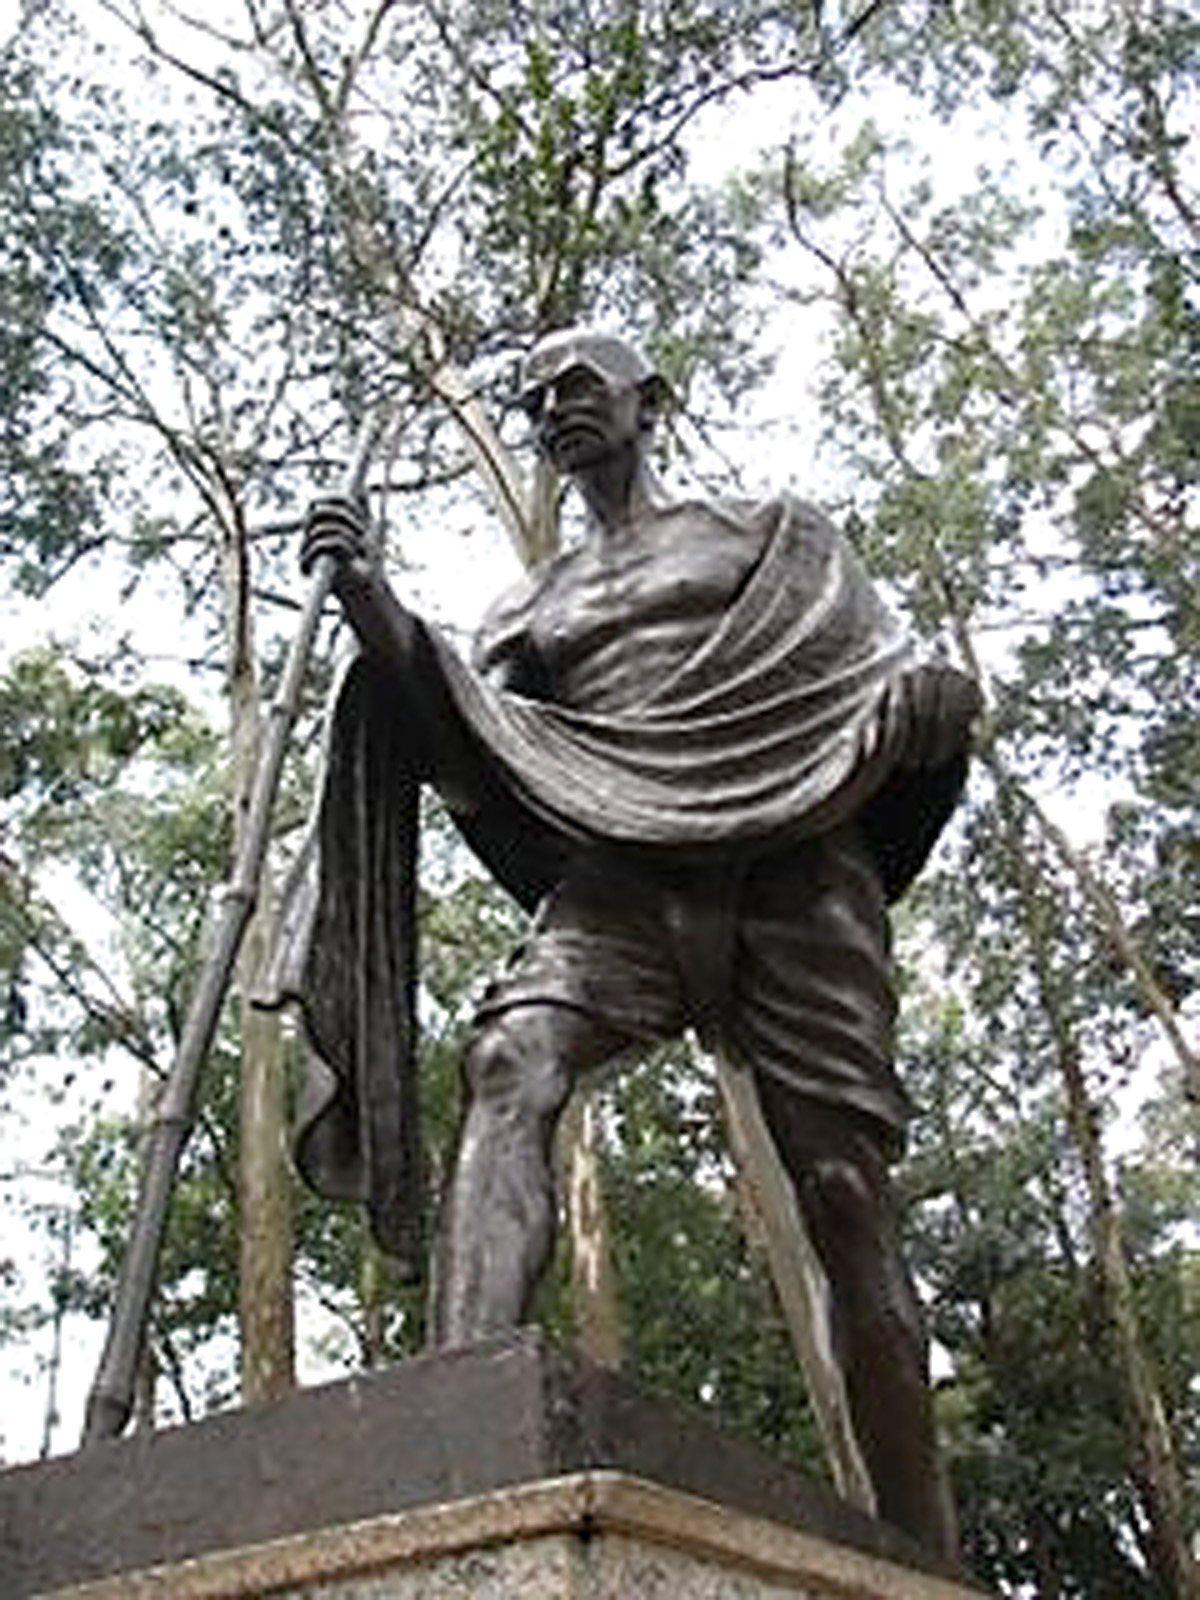 Esttua de bronze do lder indiano Mahatma Gandhi, localizada na Praa Tlio Fontoura, no Ibirapuera<a style='float:right;color:#ccc' href='https://www3.al.sp.gov.br/repositorio/noticia/09-2008/Gandhi.jpg' target=_blank><i class='bi bi-zoom-in'></i> Clique para ver a imagem </a>